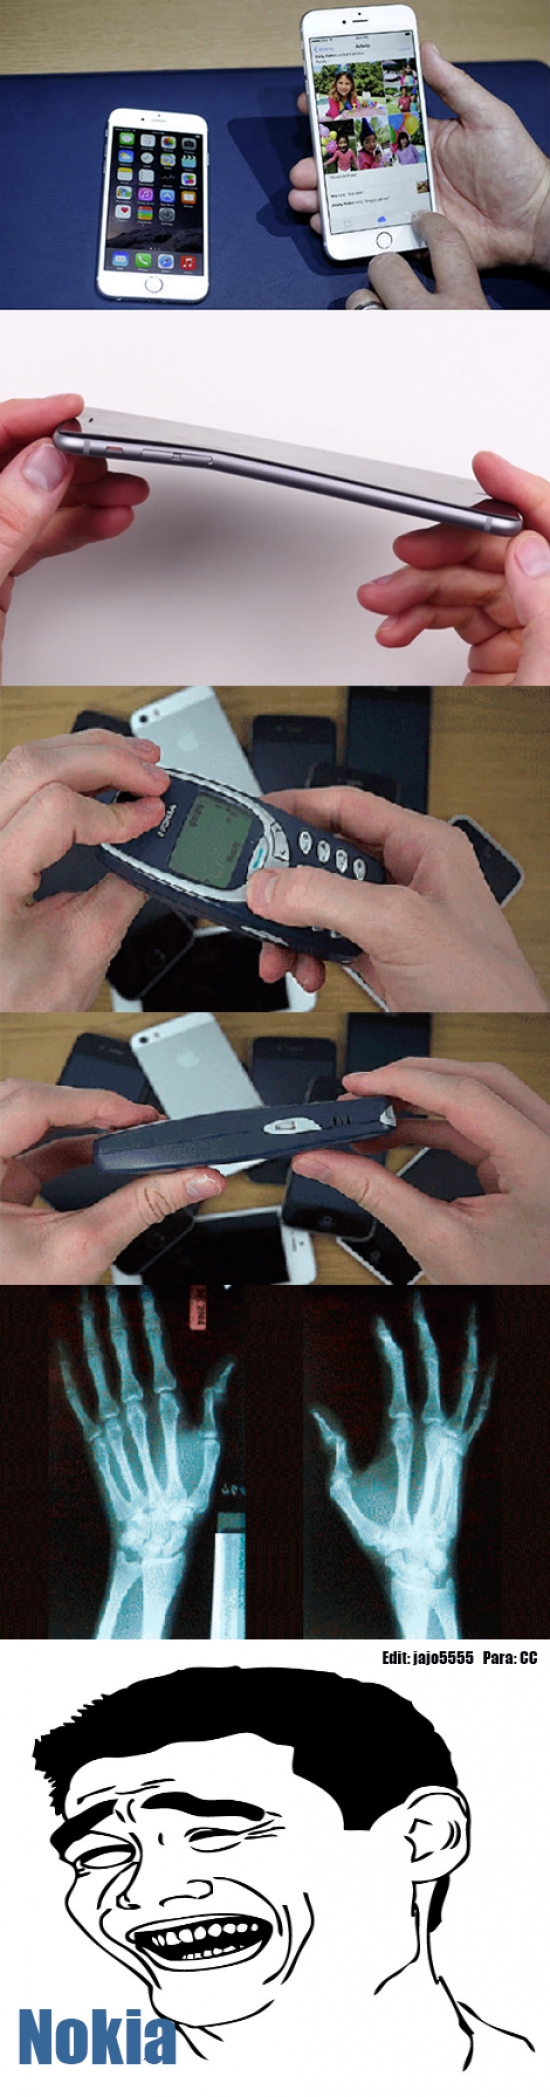 Yao - Simplemente Nokia